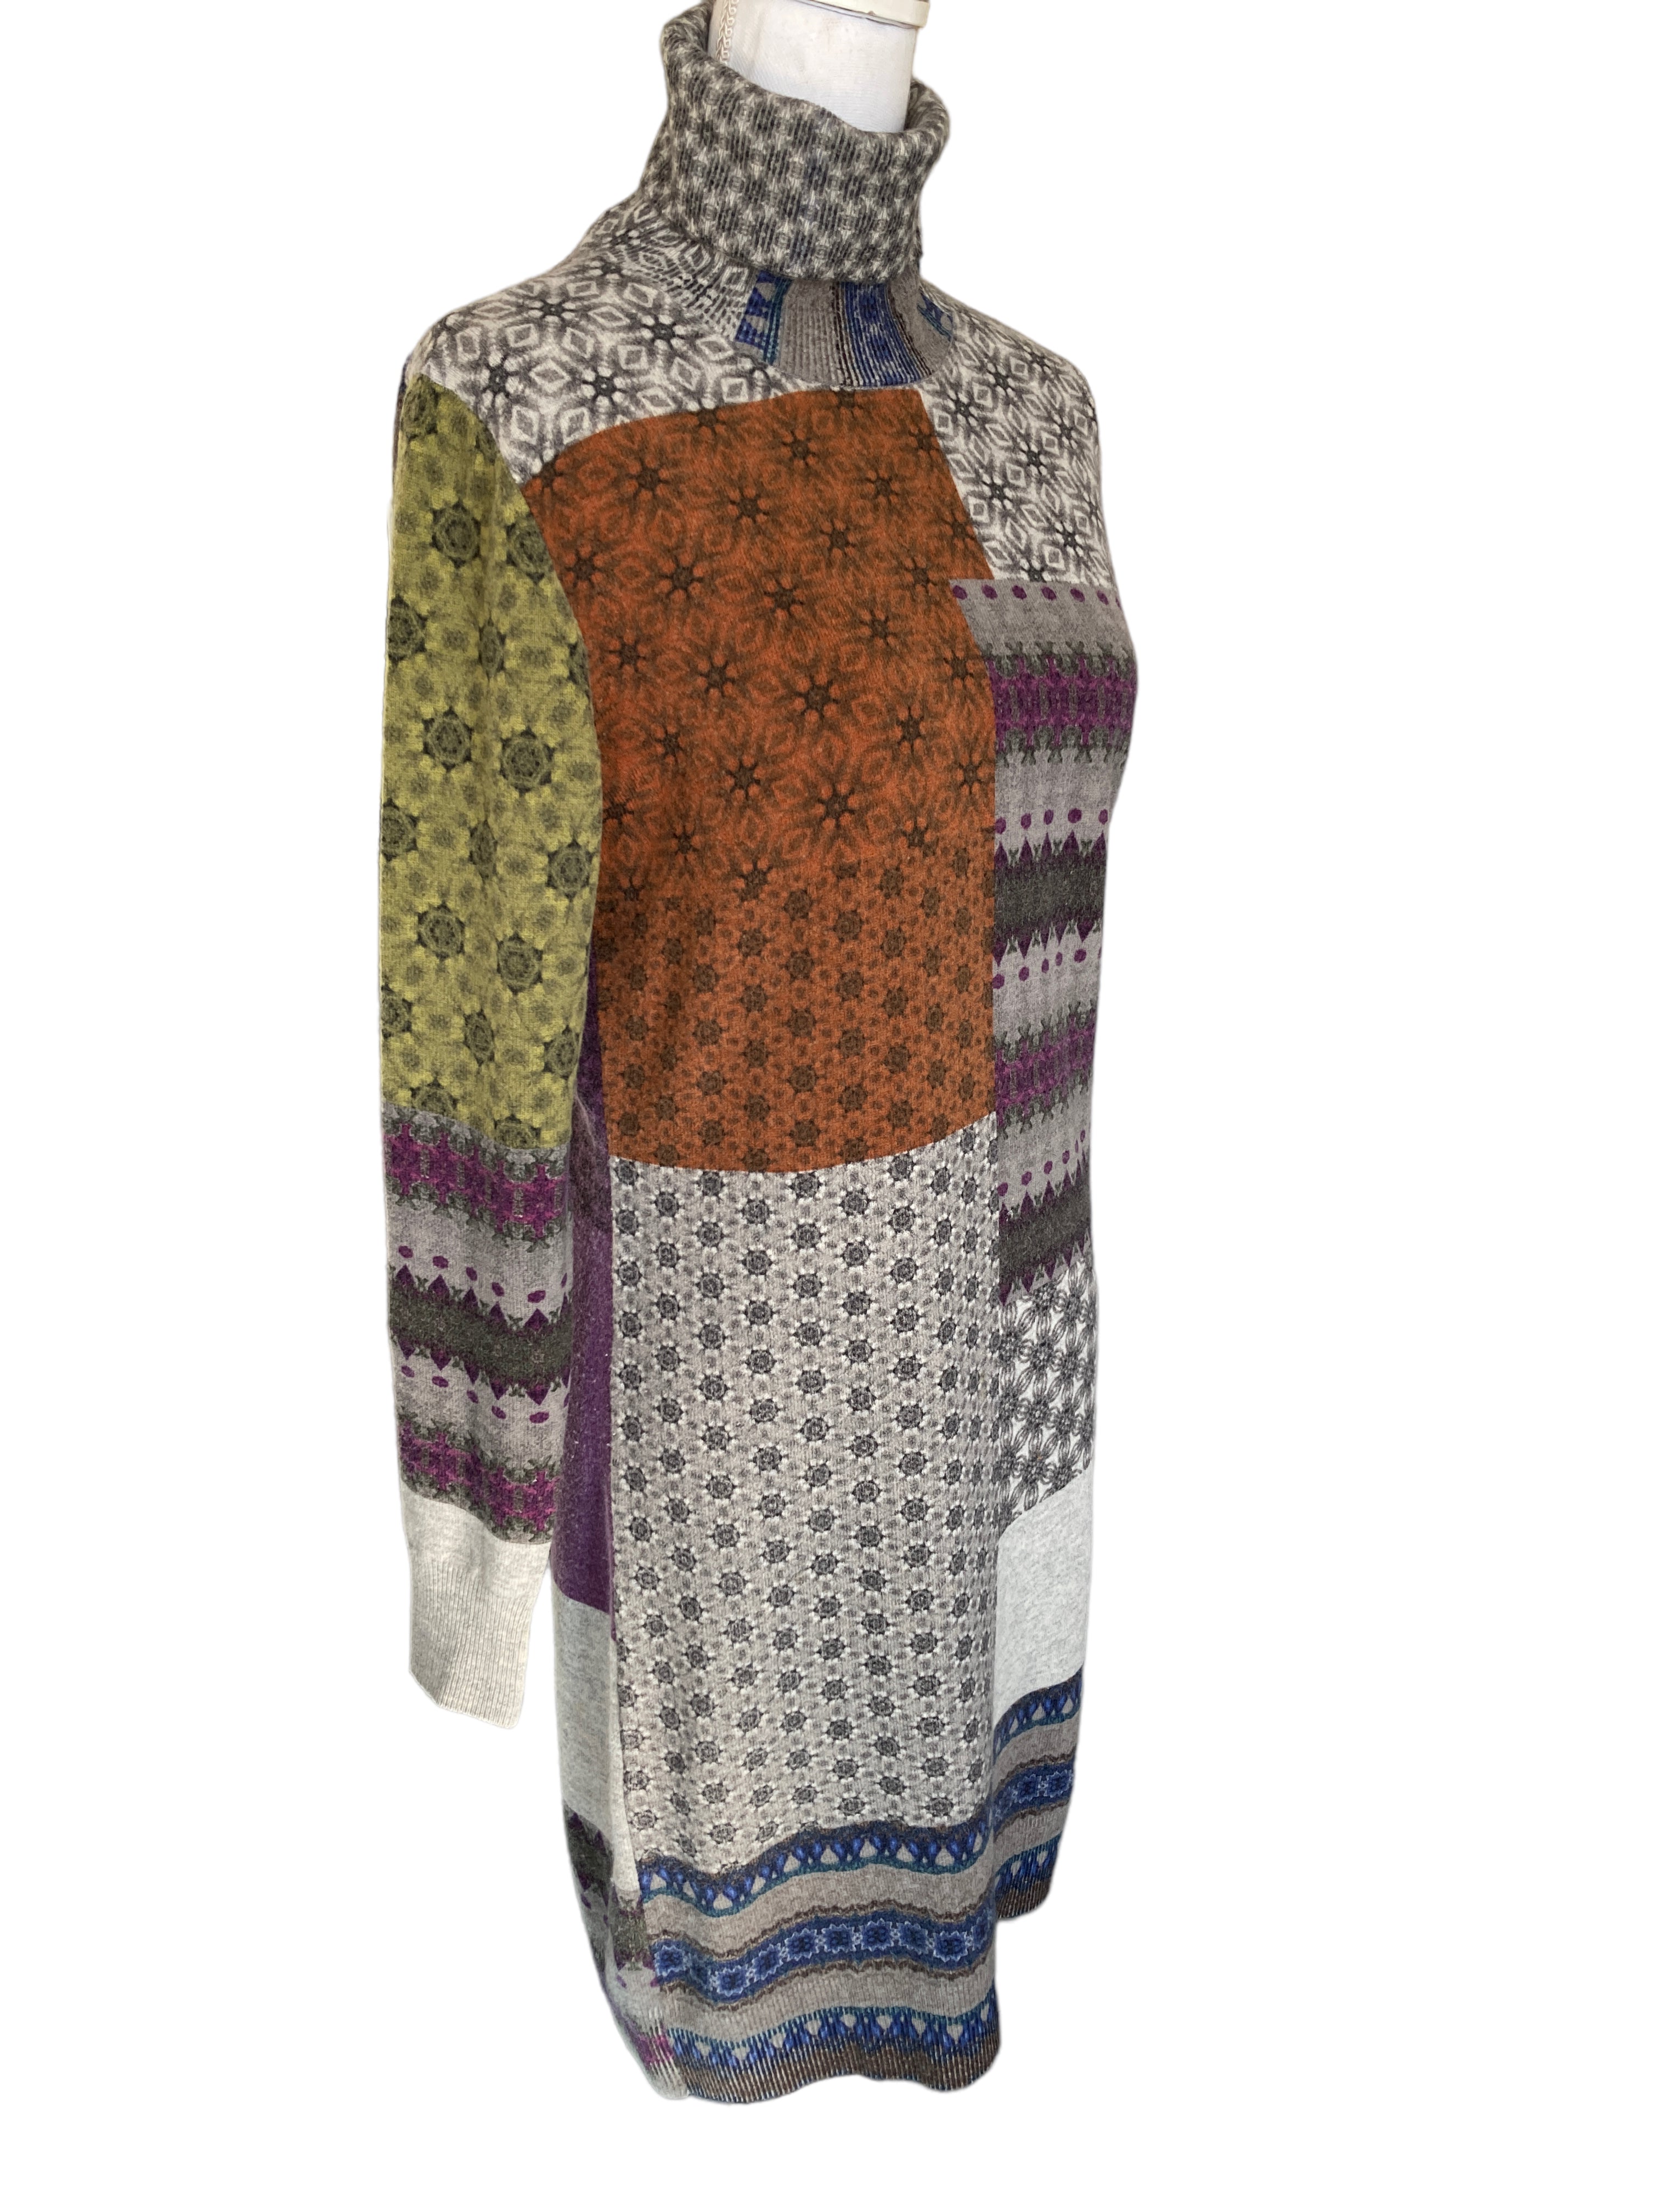 Etro Wool Patchwork Print Turtleneck Sweater Dress, M